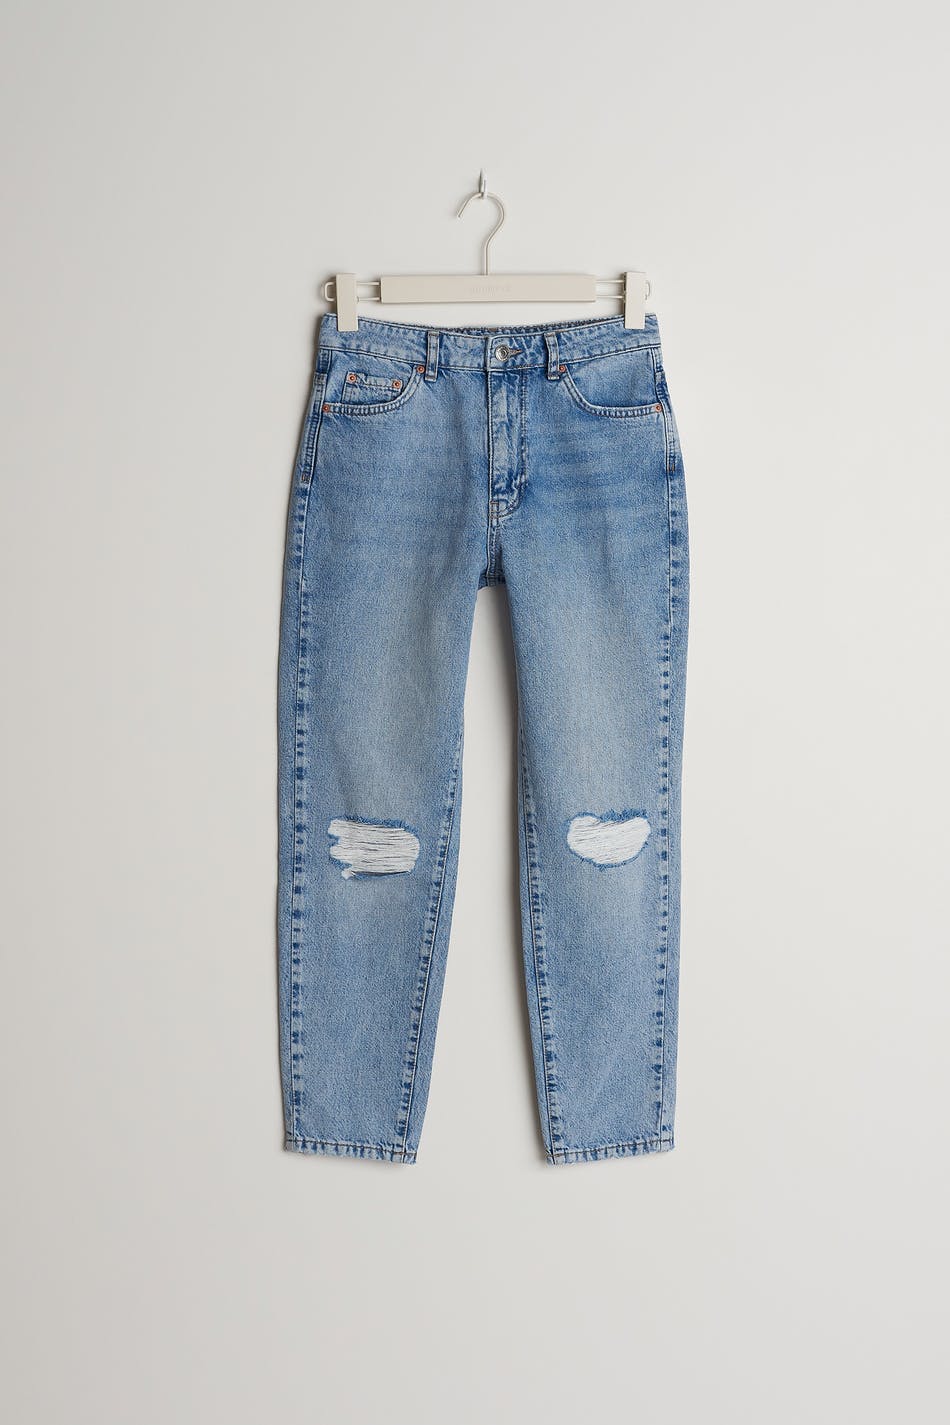 Gina Tricot Dagny PETITE jeans 40  Sea blue dest (5114)